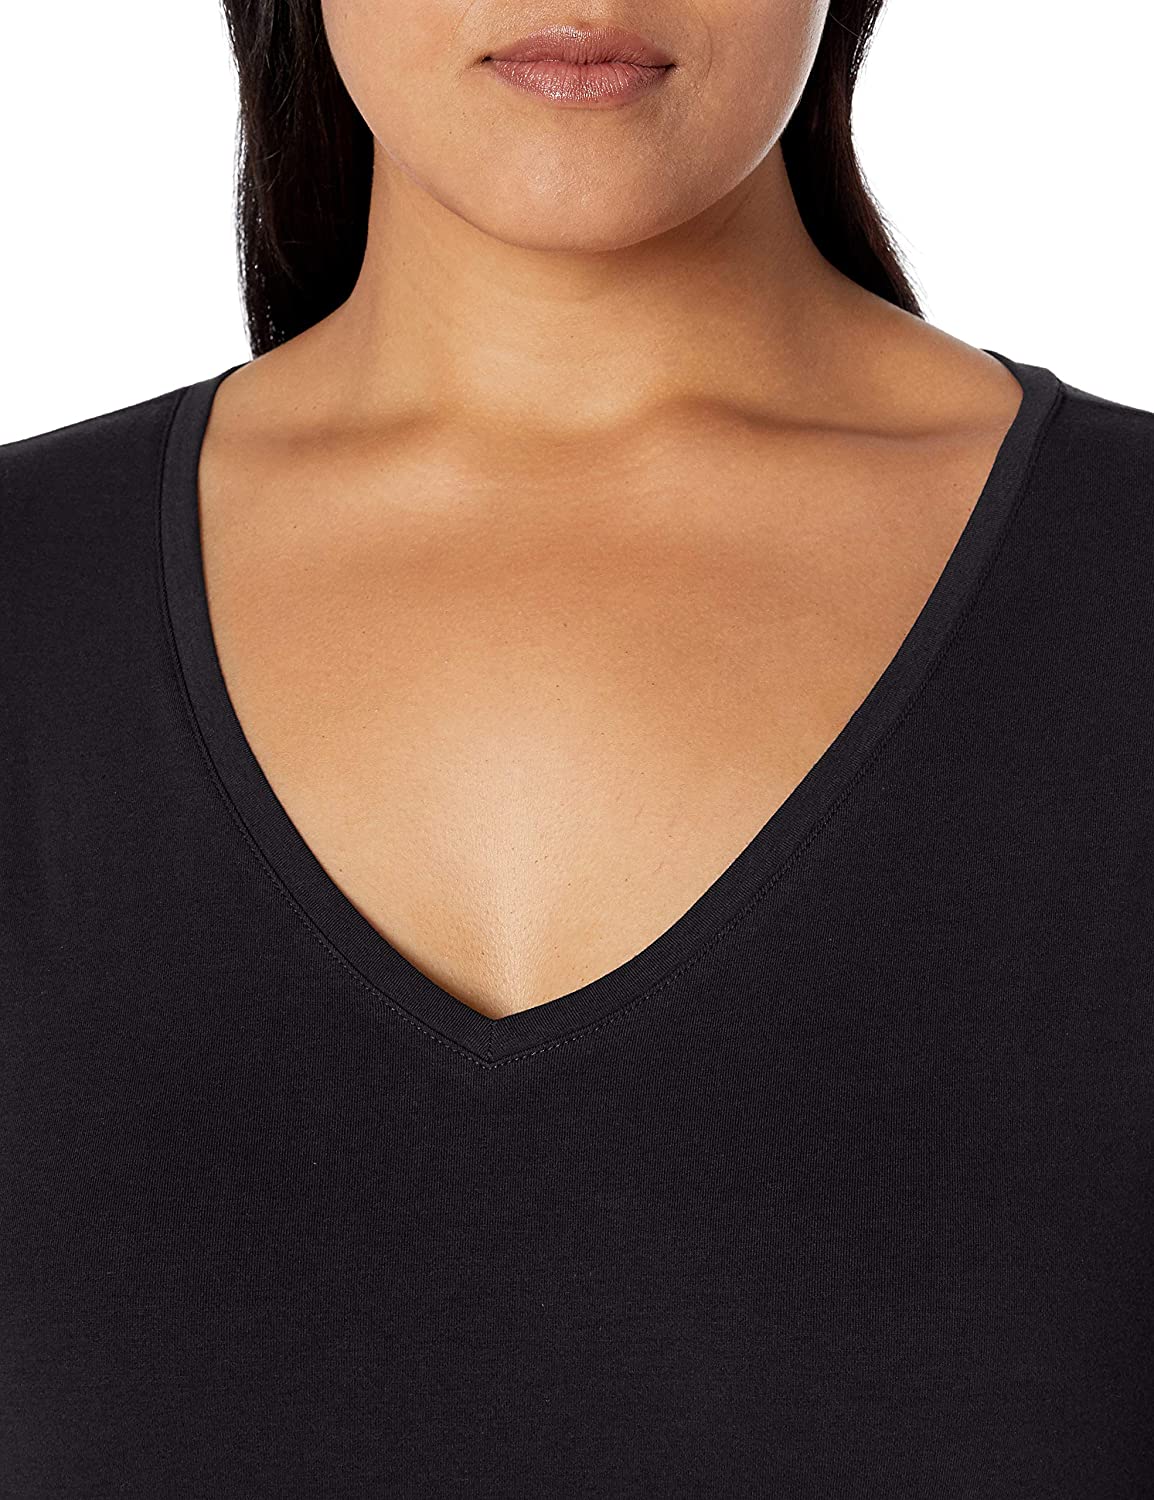 Women's Plus Size Short-Sleeve V-Neck T-Shirt